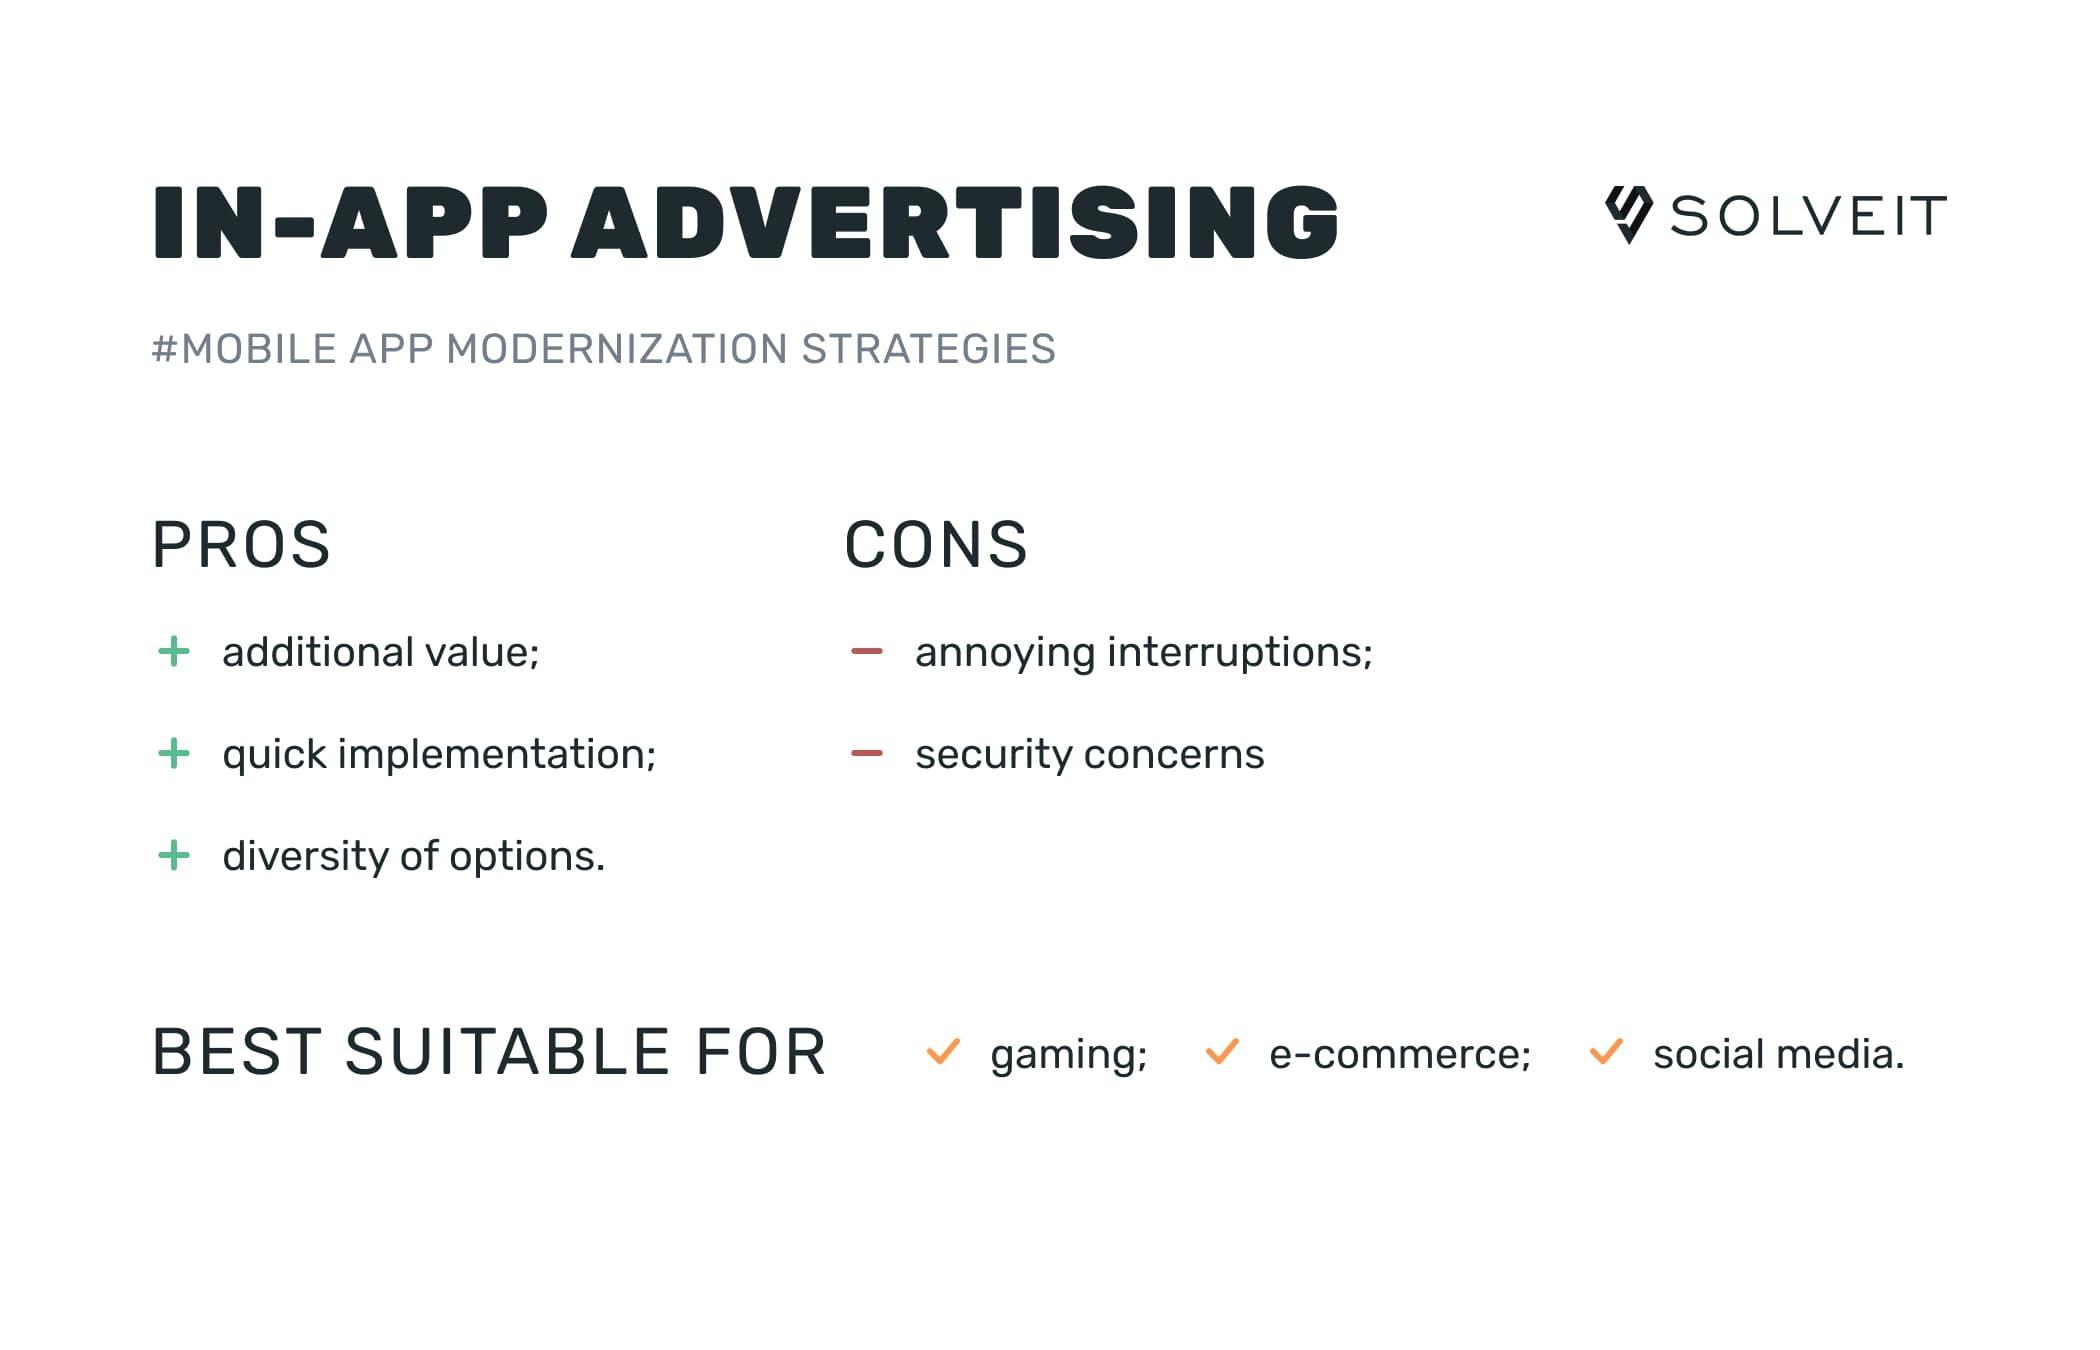 app monetization strategies: in-app advertising